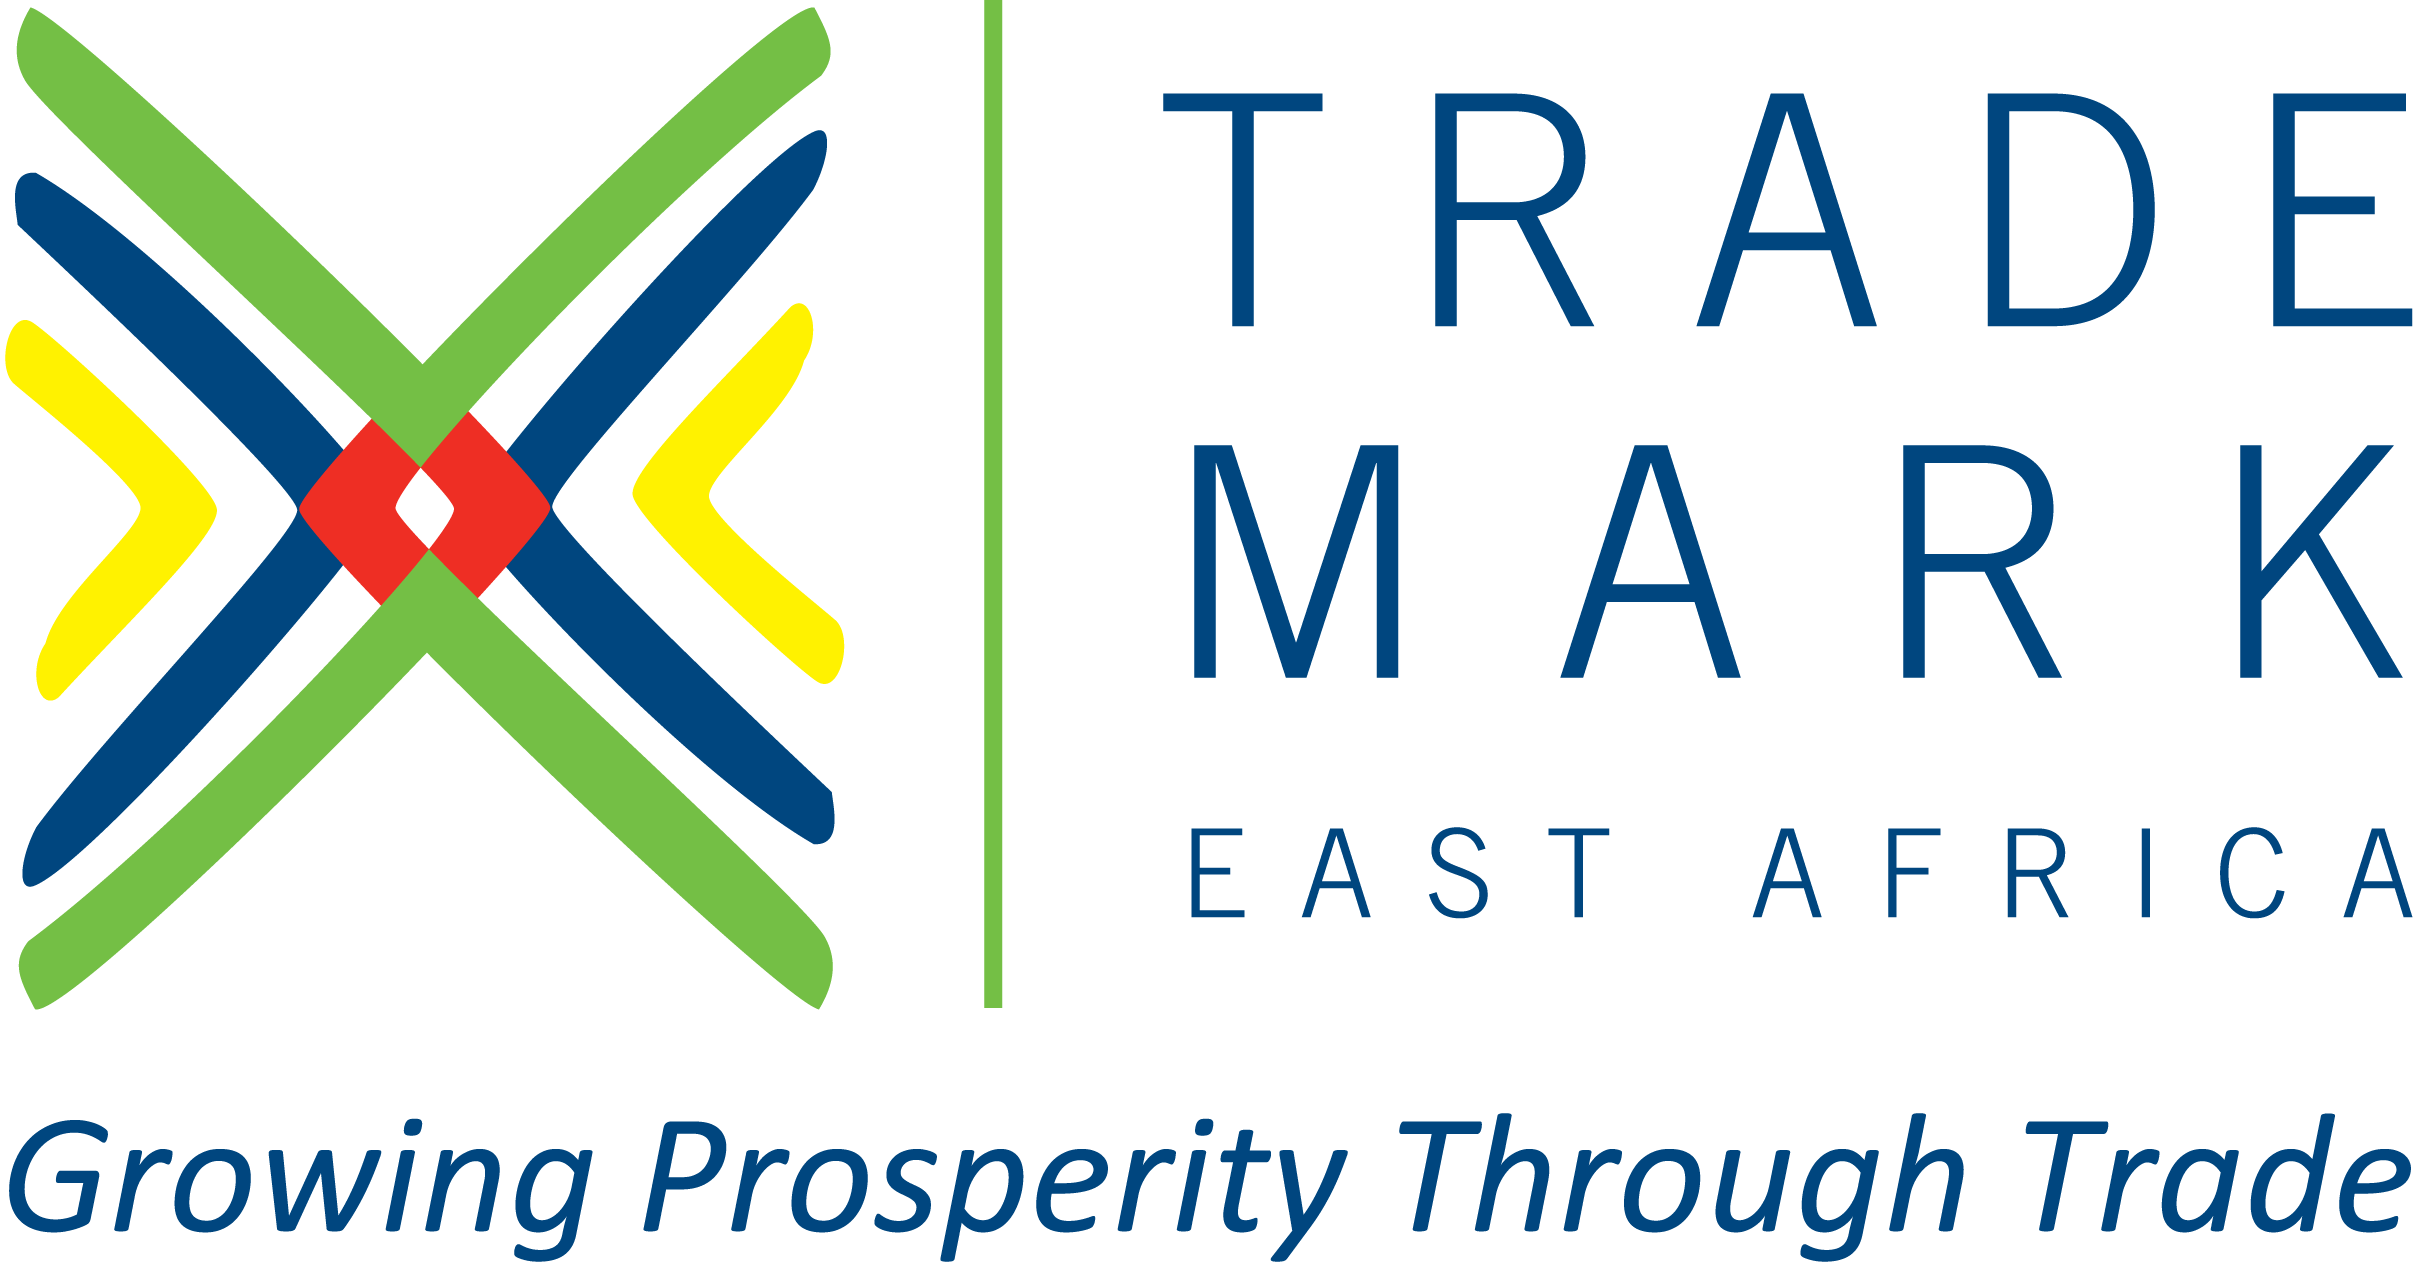 TradeMark East Africa (TMEA))